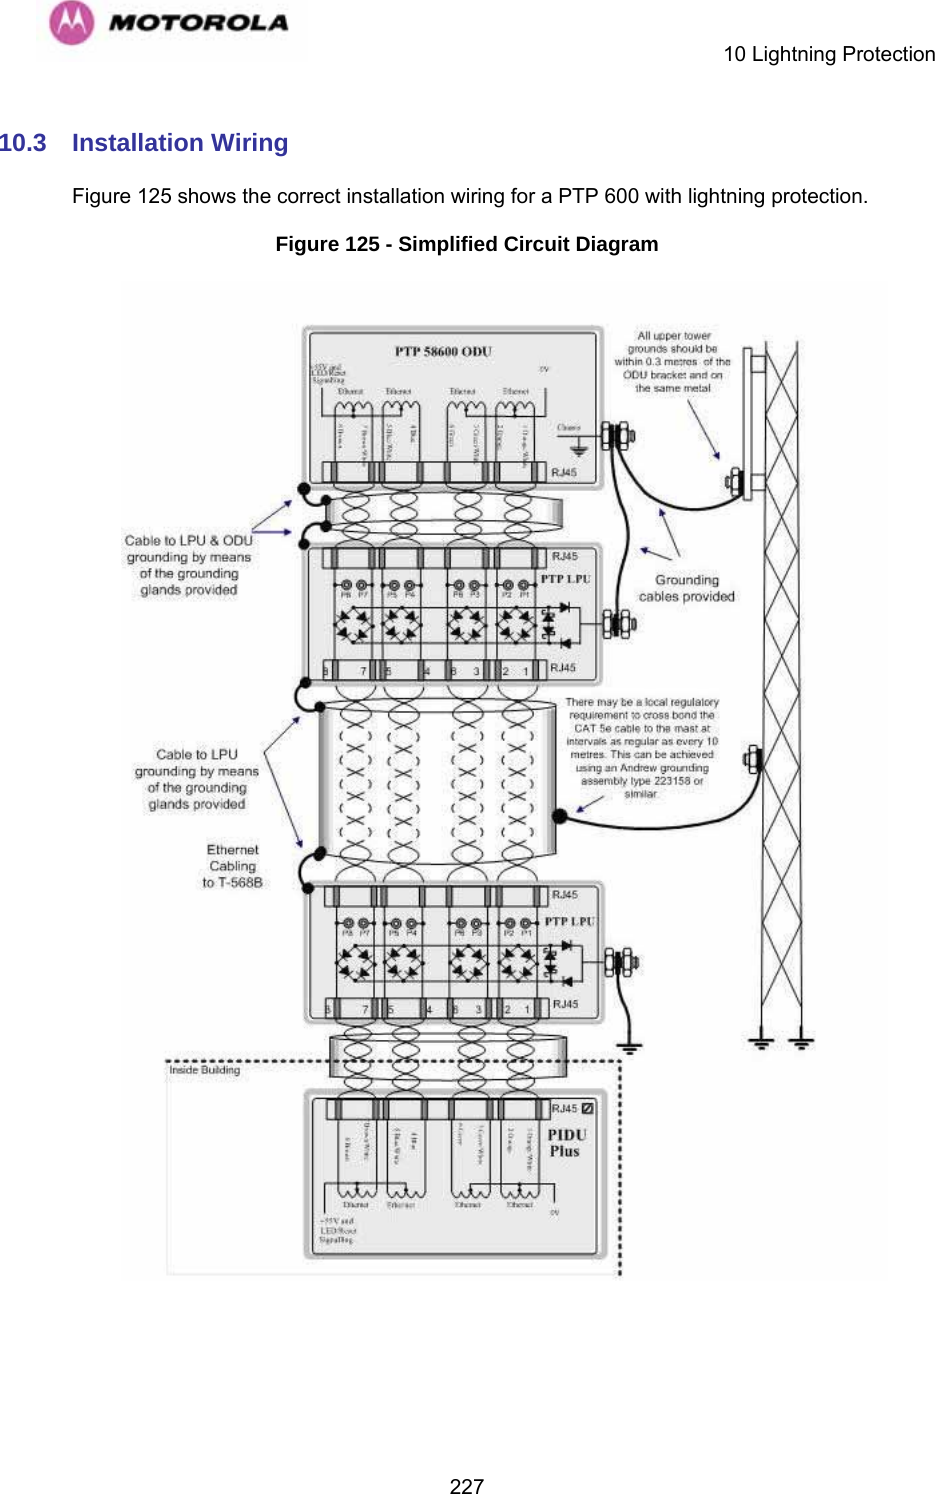    10 Lightning Protection  22710.3  Installation Wiring Figure 125 shows the correct installation wiring for a PTP 600 with lightning protection. Figure 125 - Simplified Circuit Diagram    